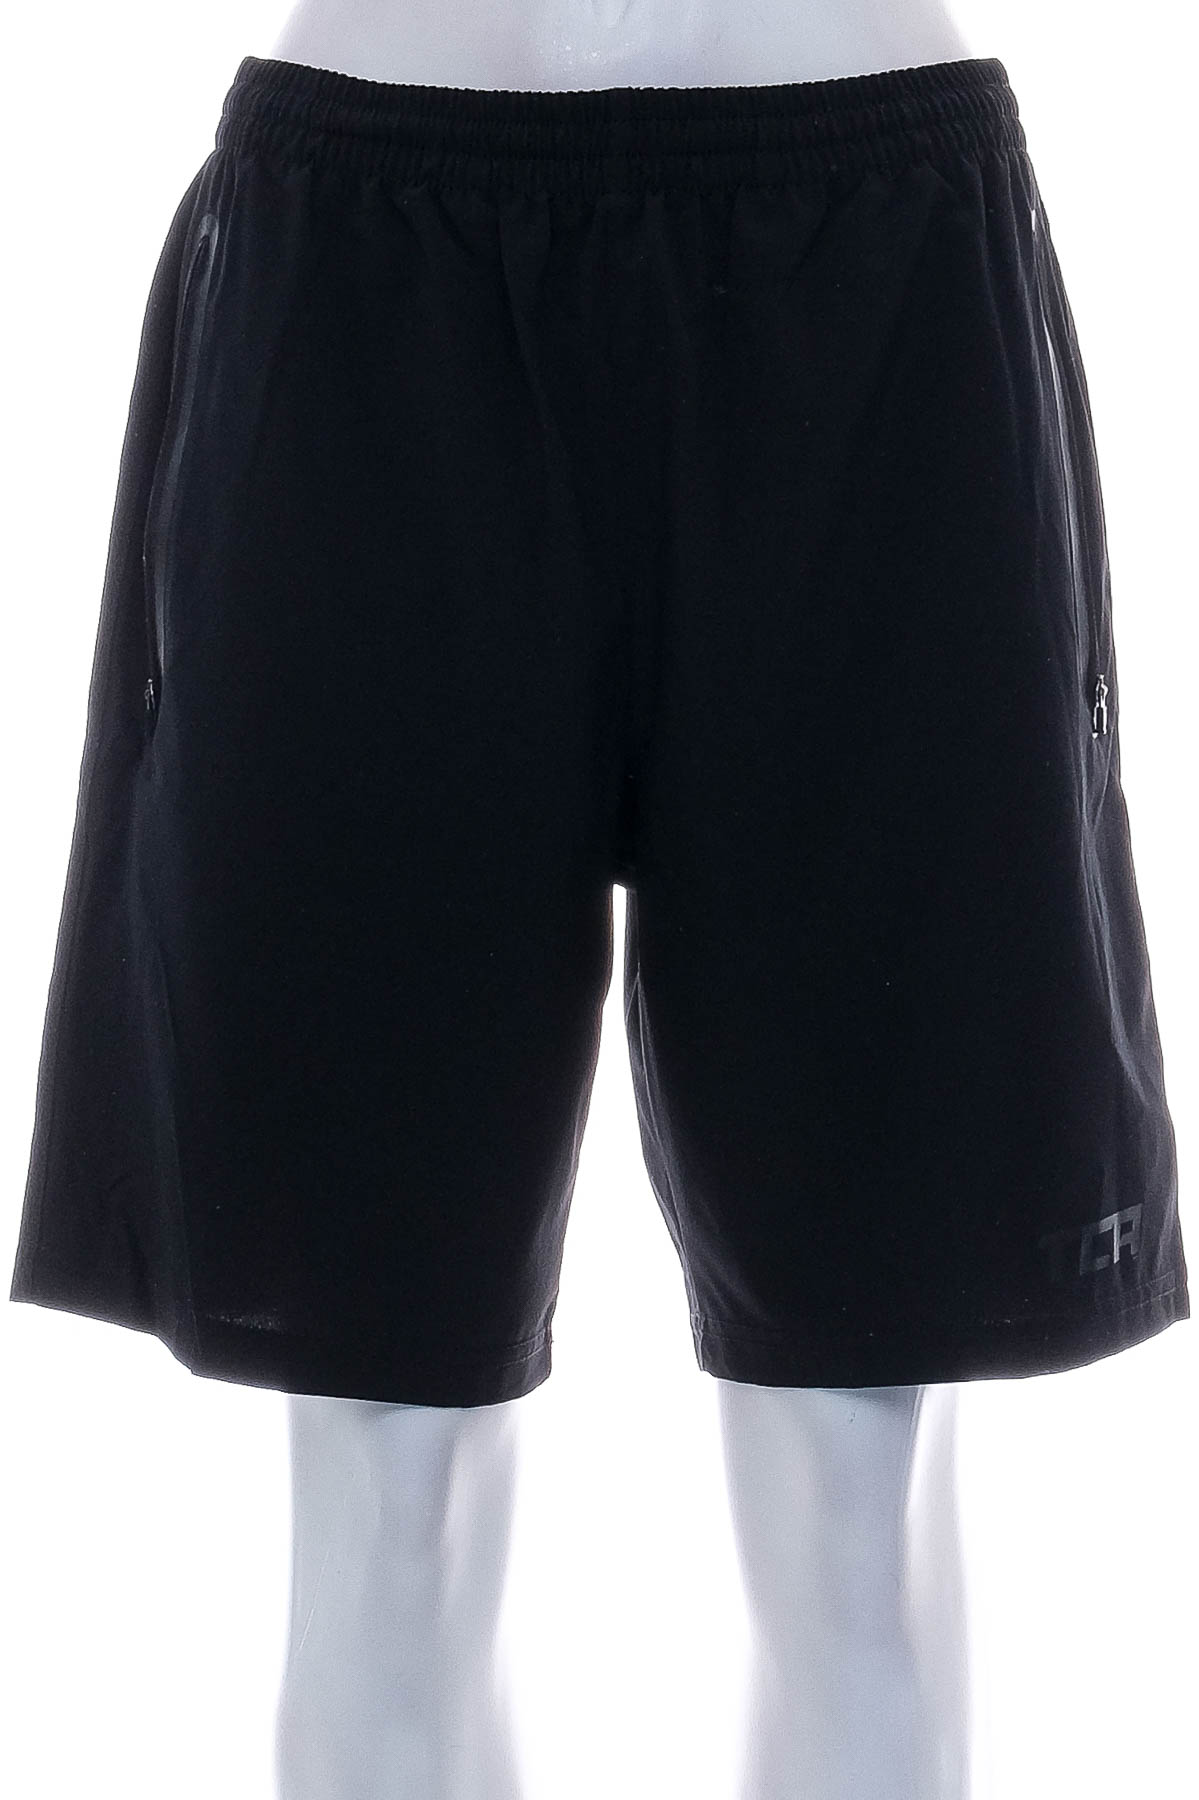 Women's shorts - TCA - 0